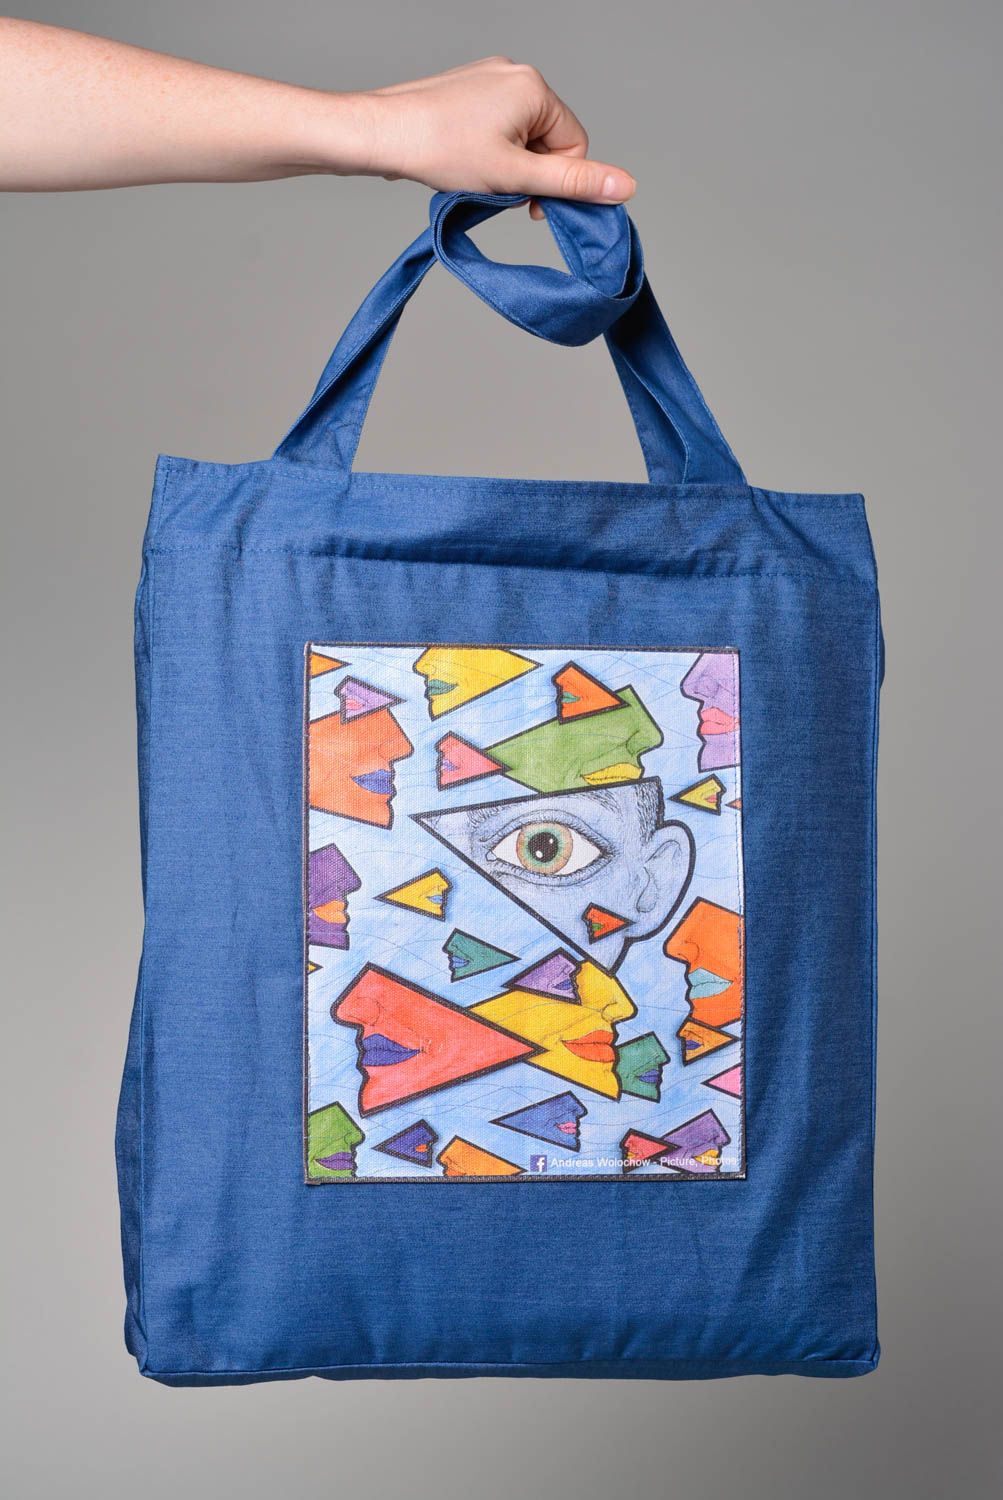 Stylish handmade fabric bag textile handbag shoulder bag casual style gift ideas photo 4